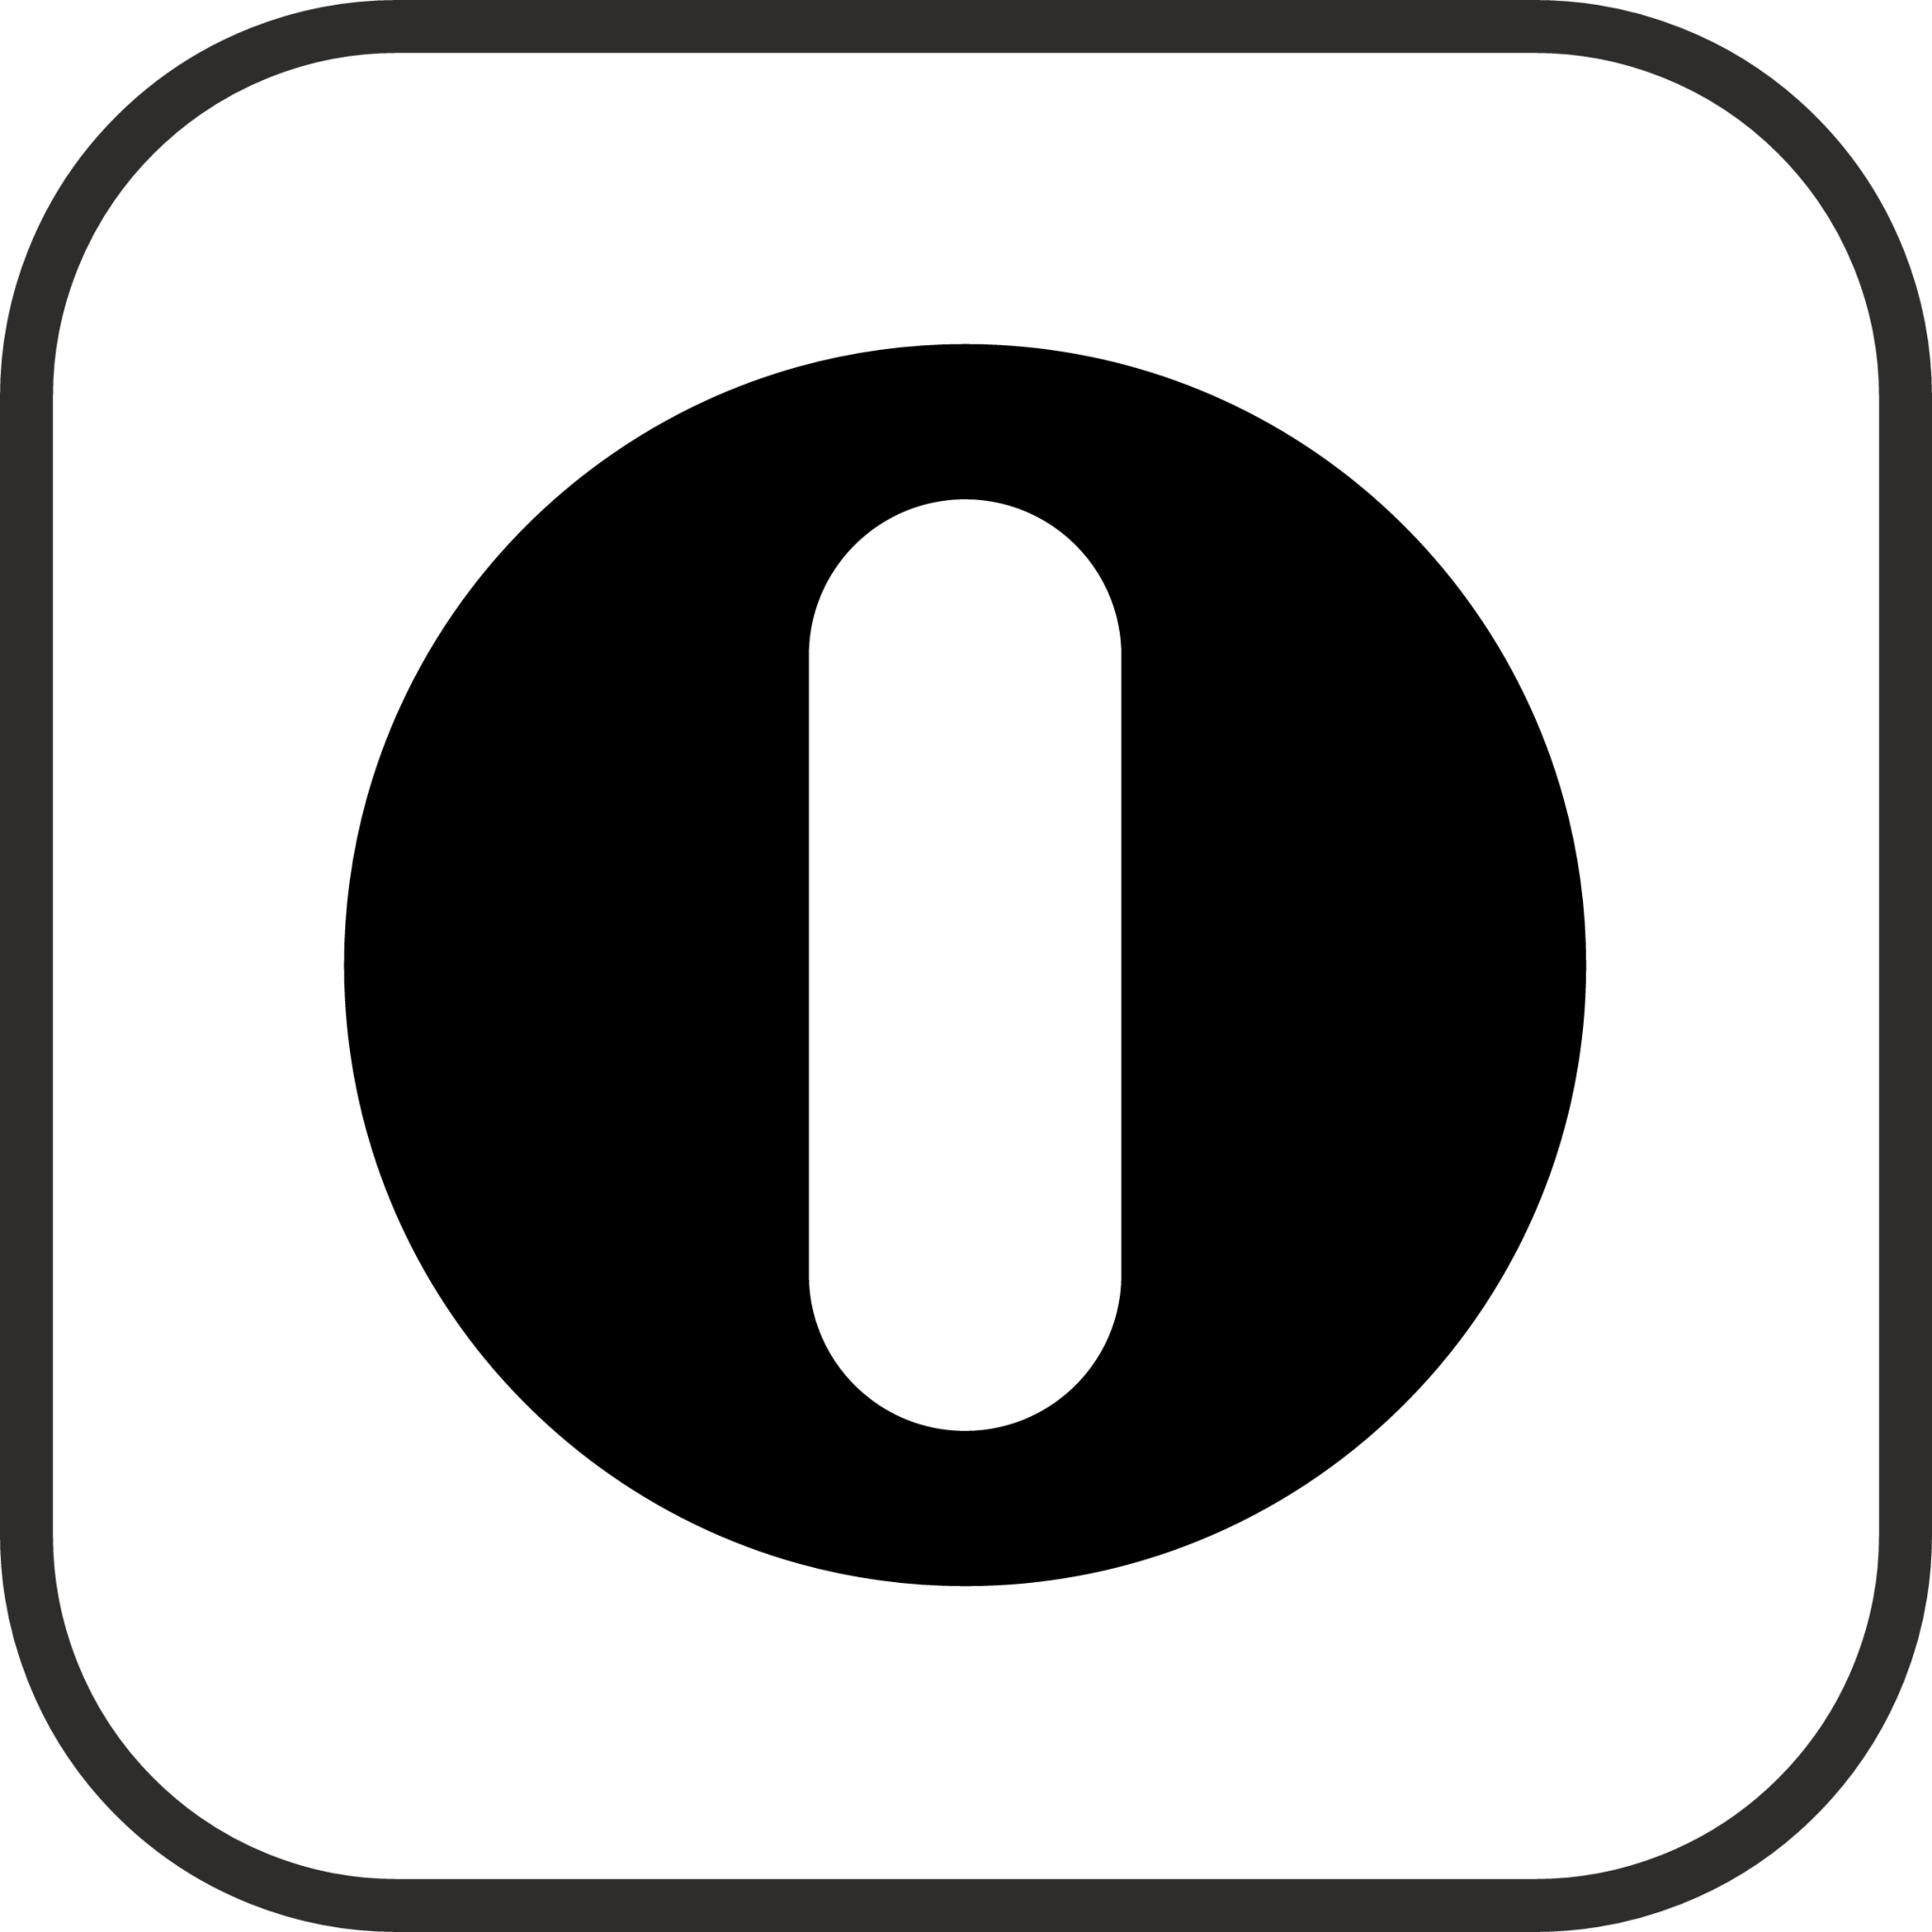 big o notation icon